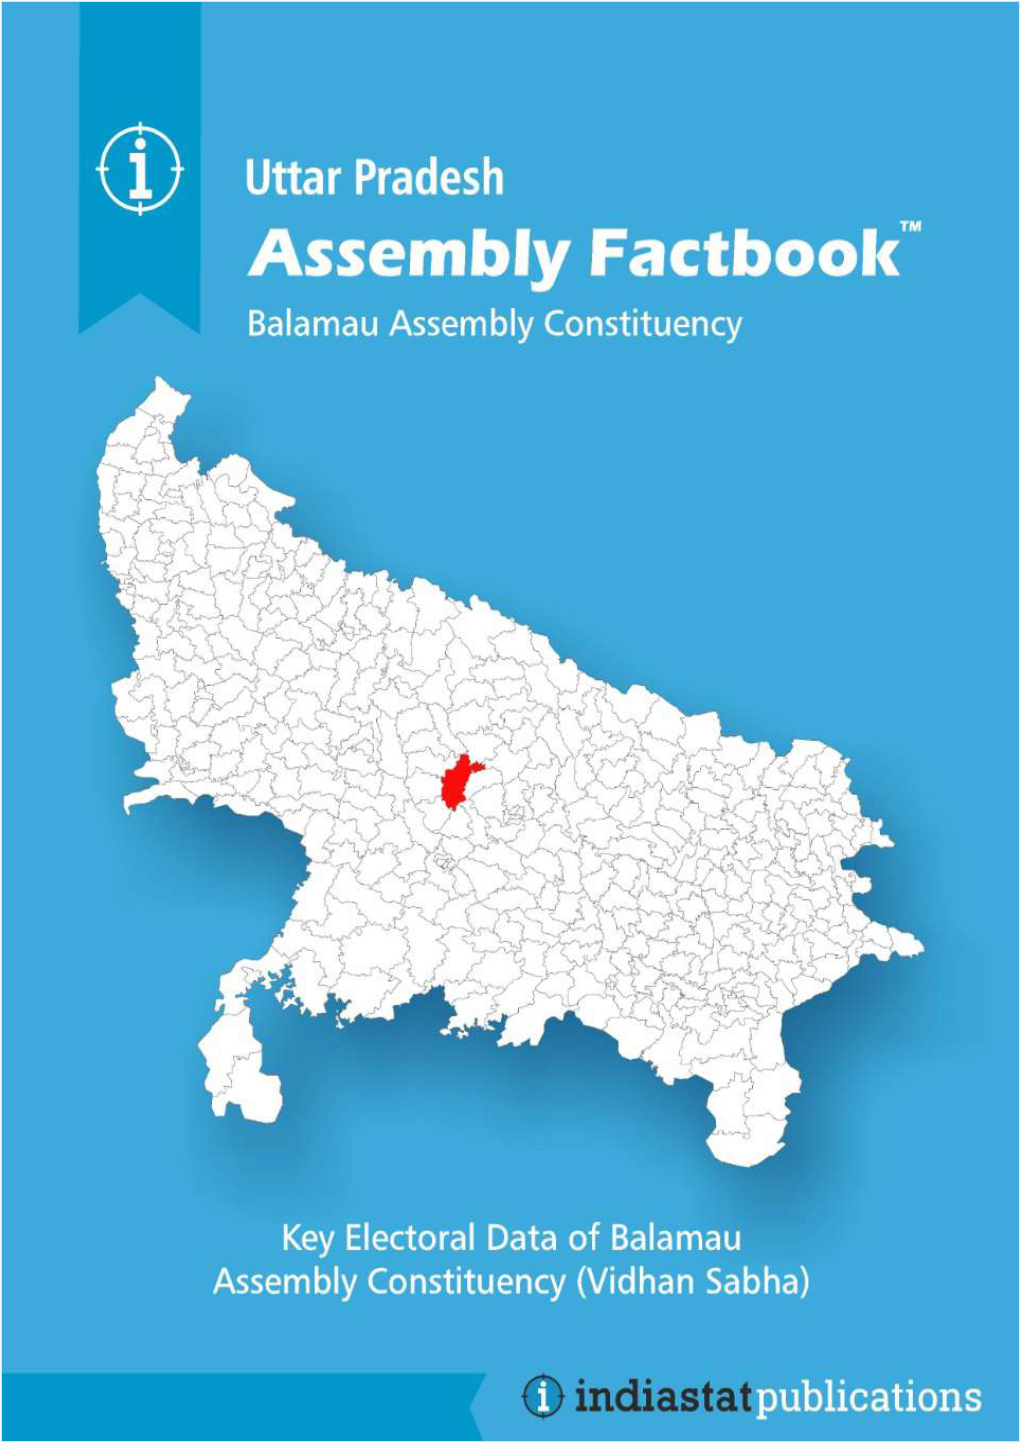 Balamau Assembly Uttar Pradesh Factbook